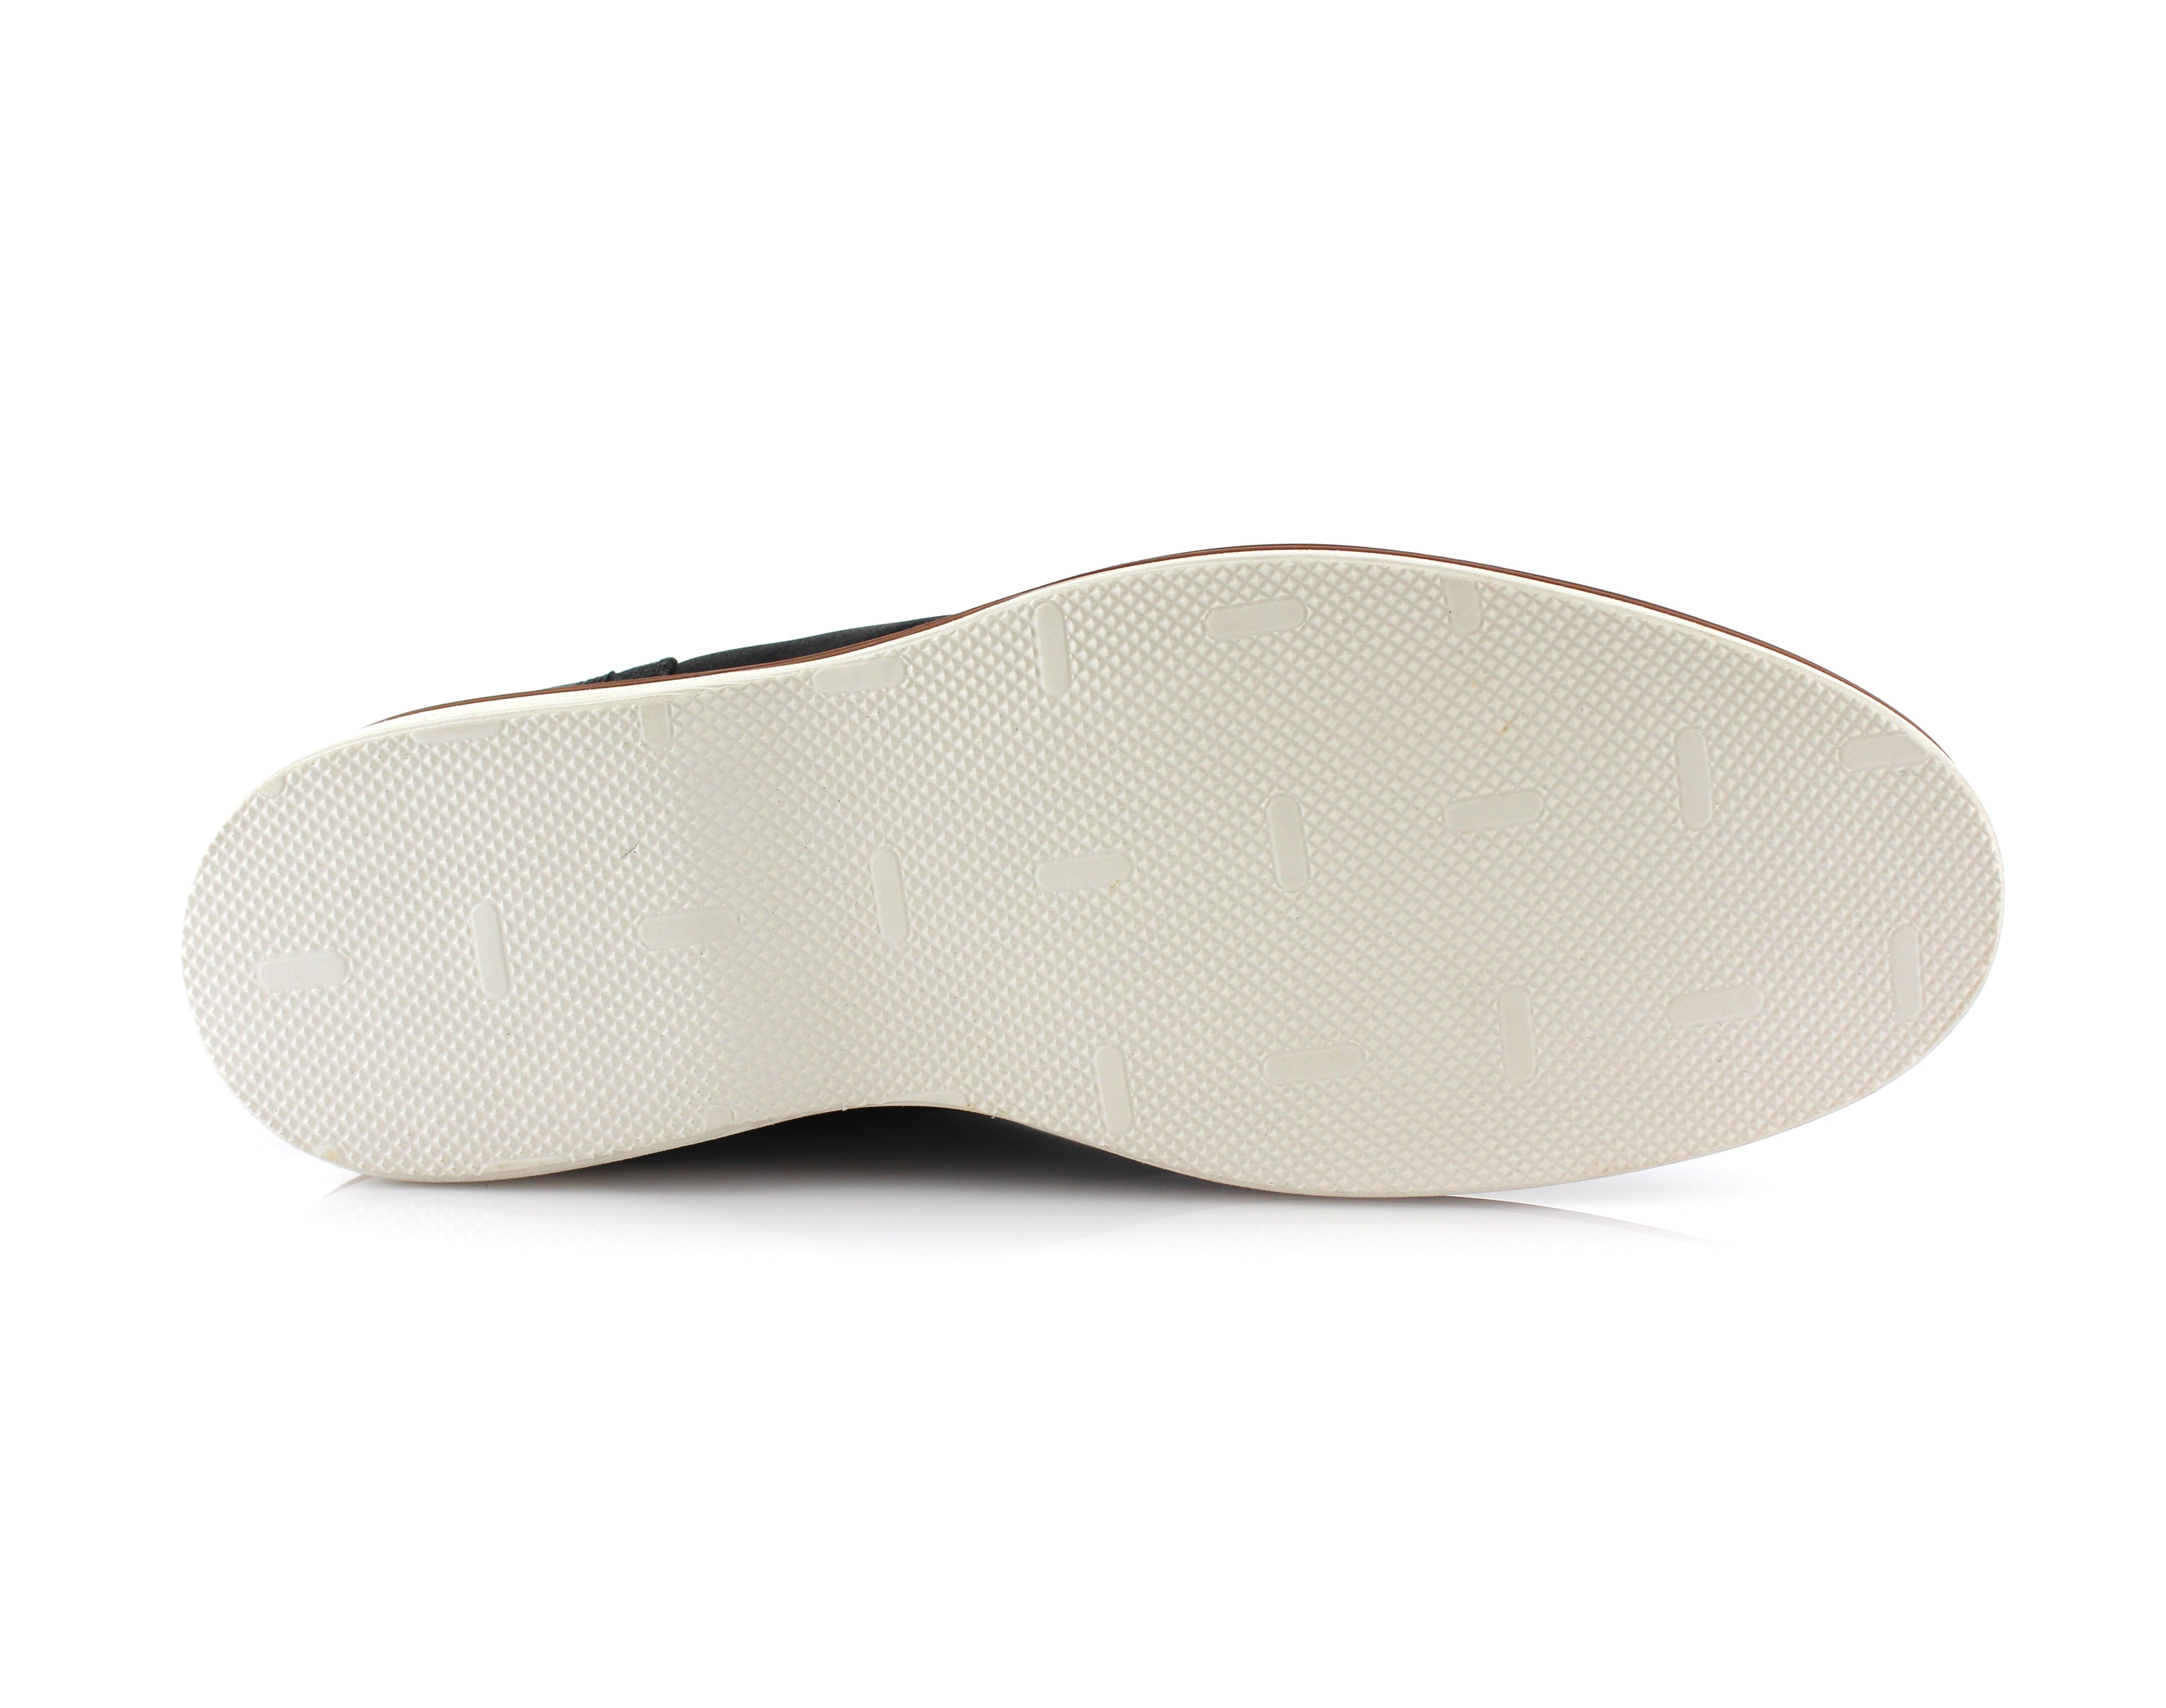 Burnished Cap-Toe Chukka Boots | Sammy by Ferro Aldo | Conal Footwear | Bottom Sole Angle View